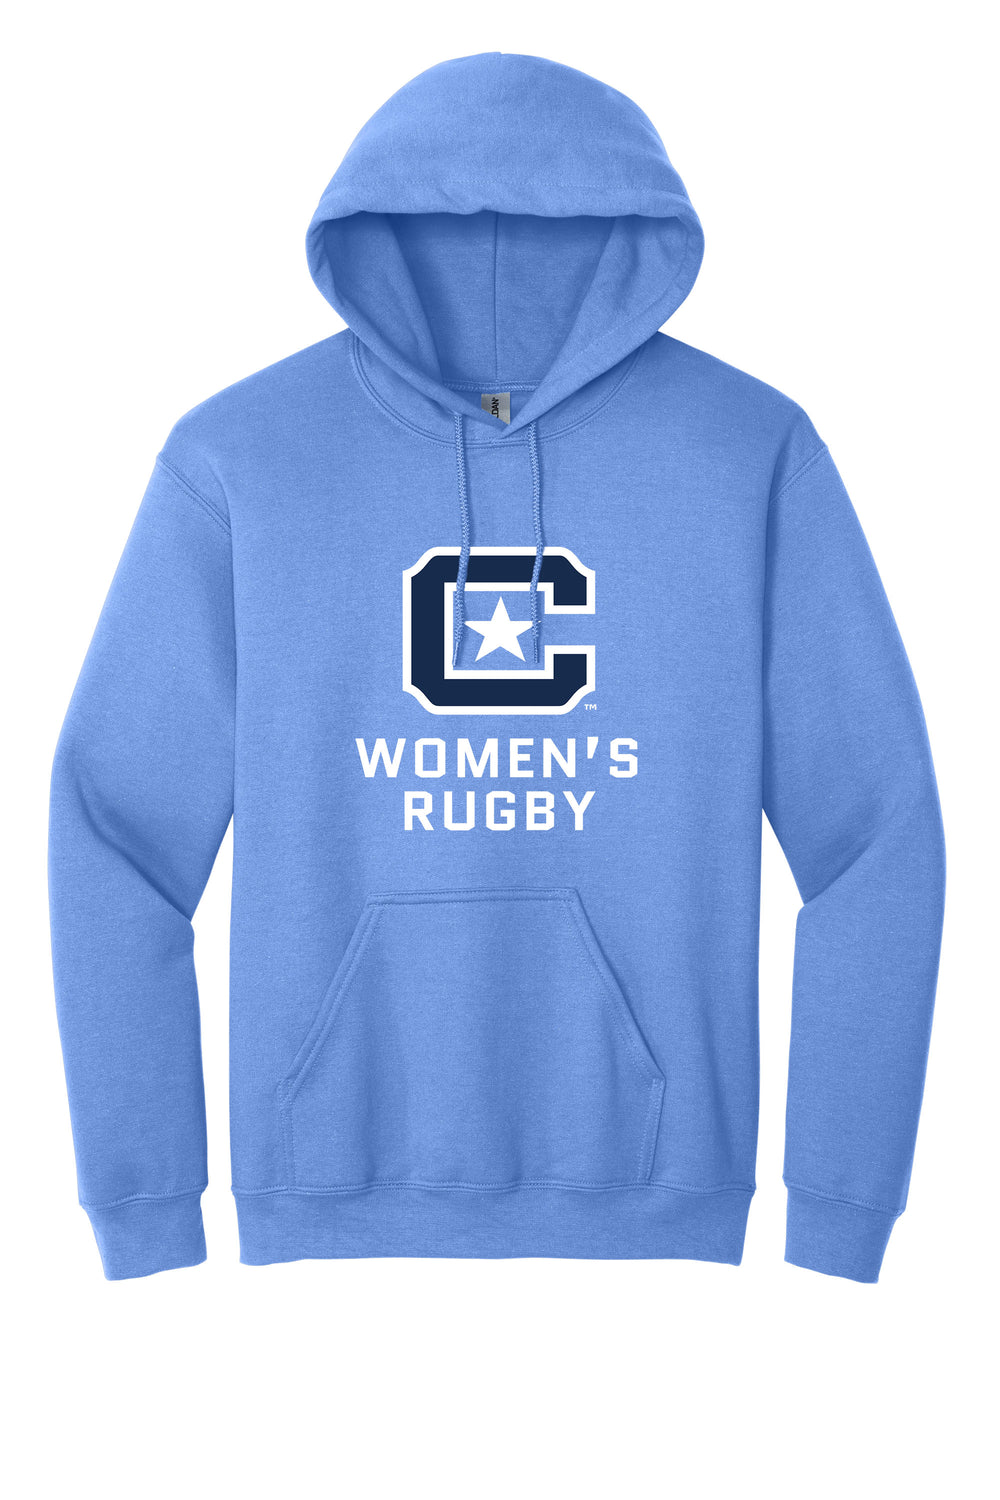 18500- The Citadel Block C Star logo, Sports - Women's Rugby,  Heavy Blend™ Hooded Unisex Sweatshirt